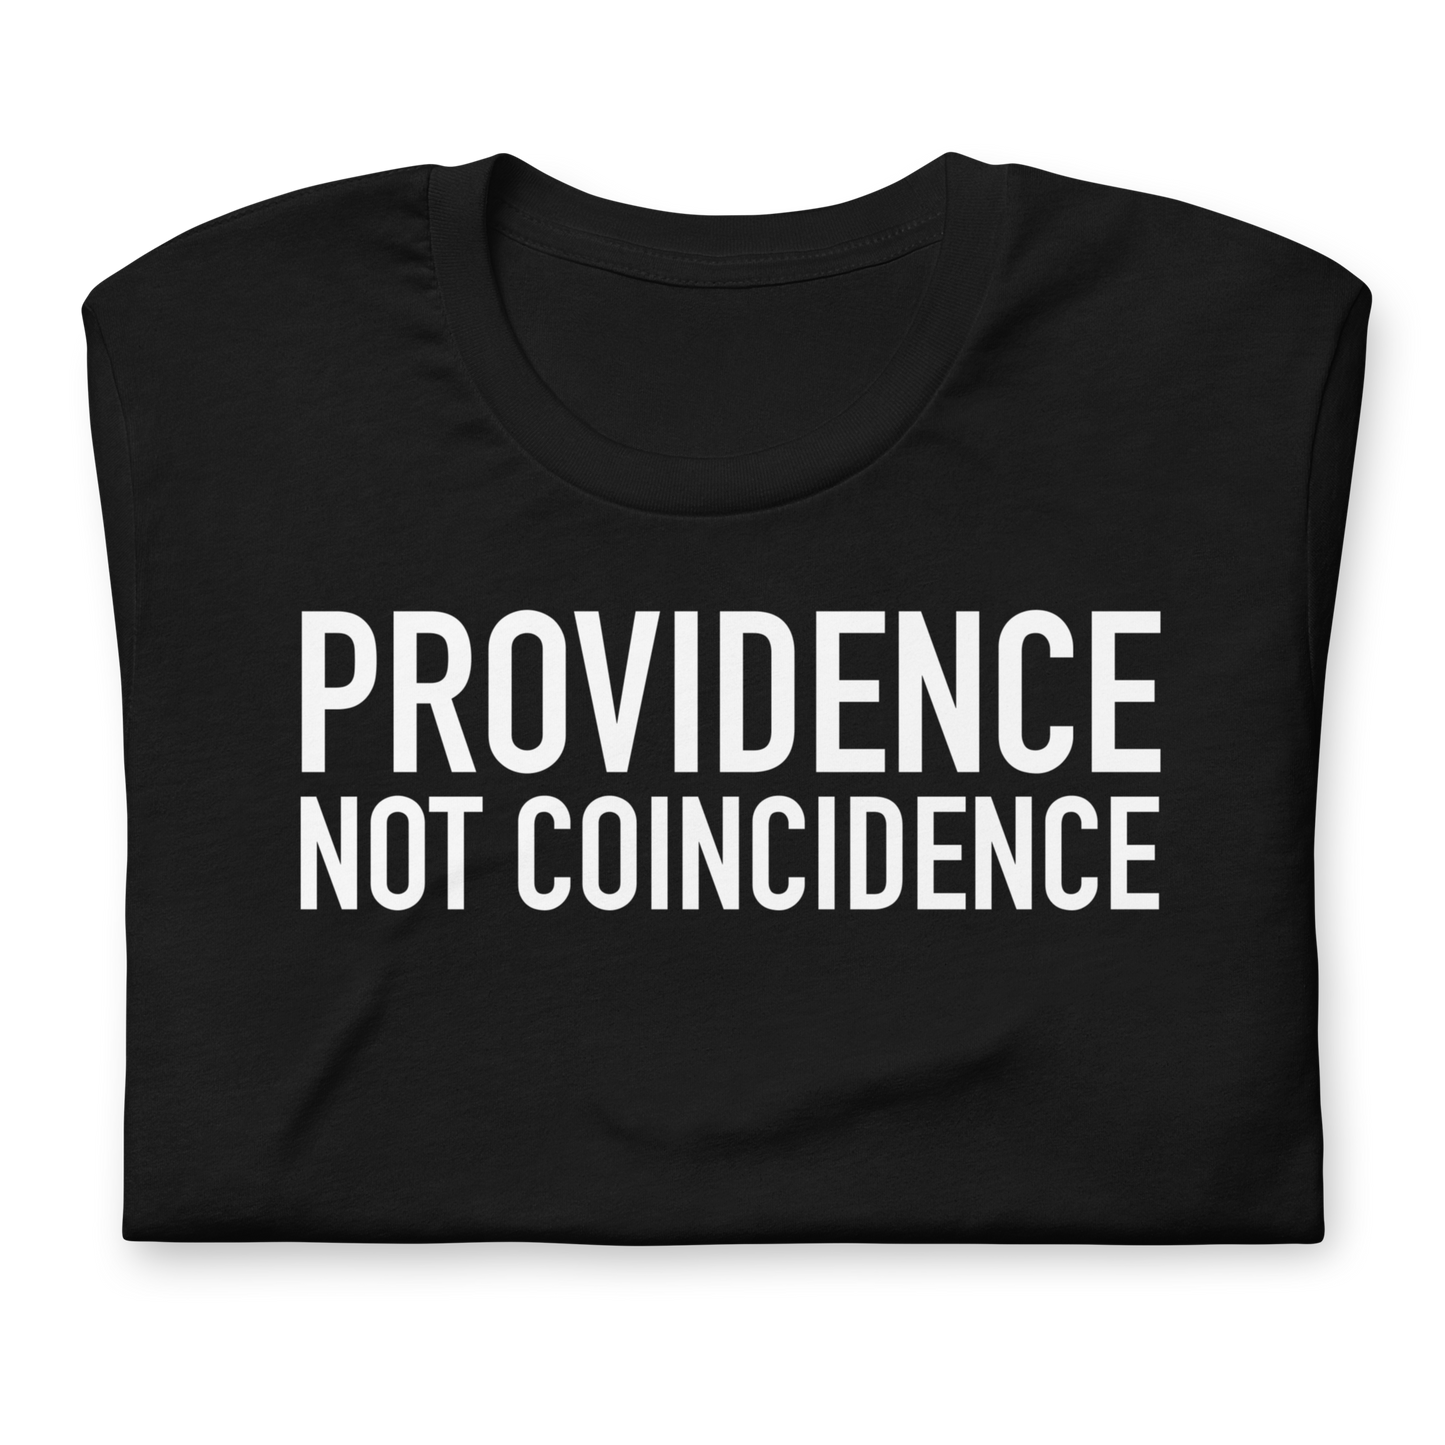 Unisex - Christian - Providence not Coincidence - T-shirt